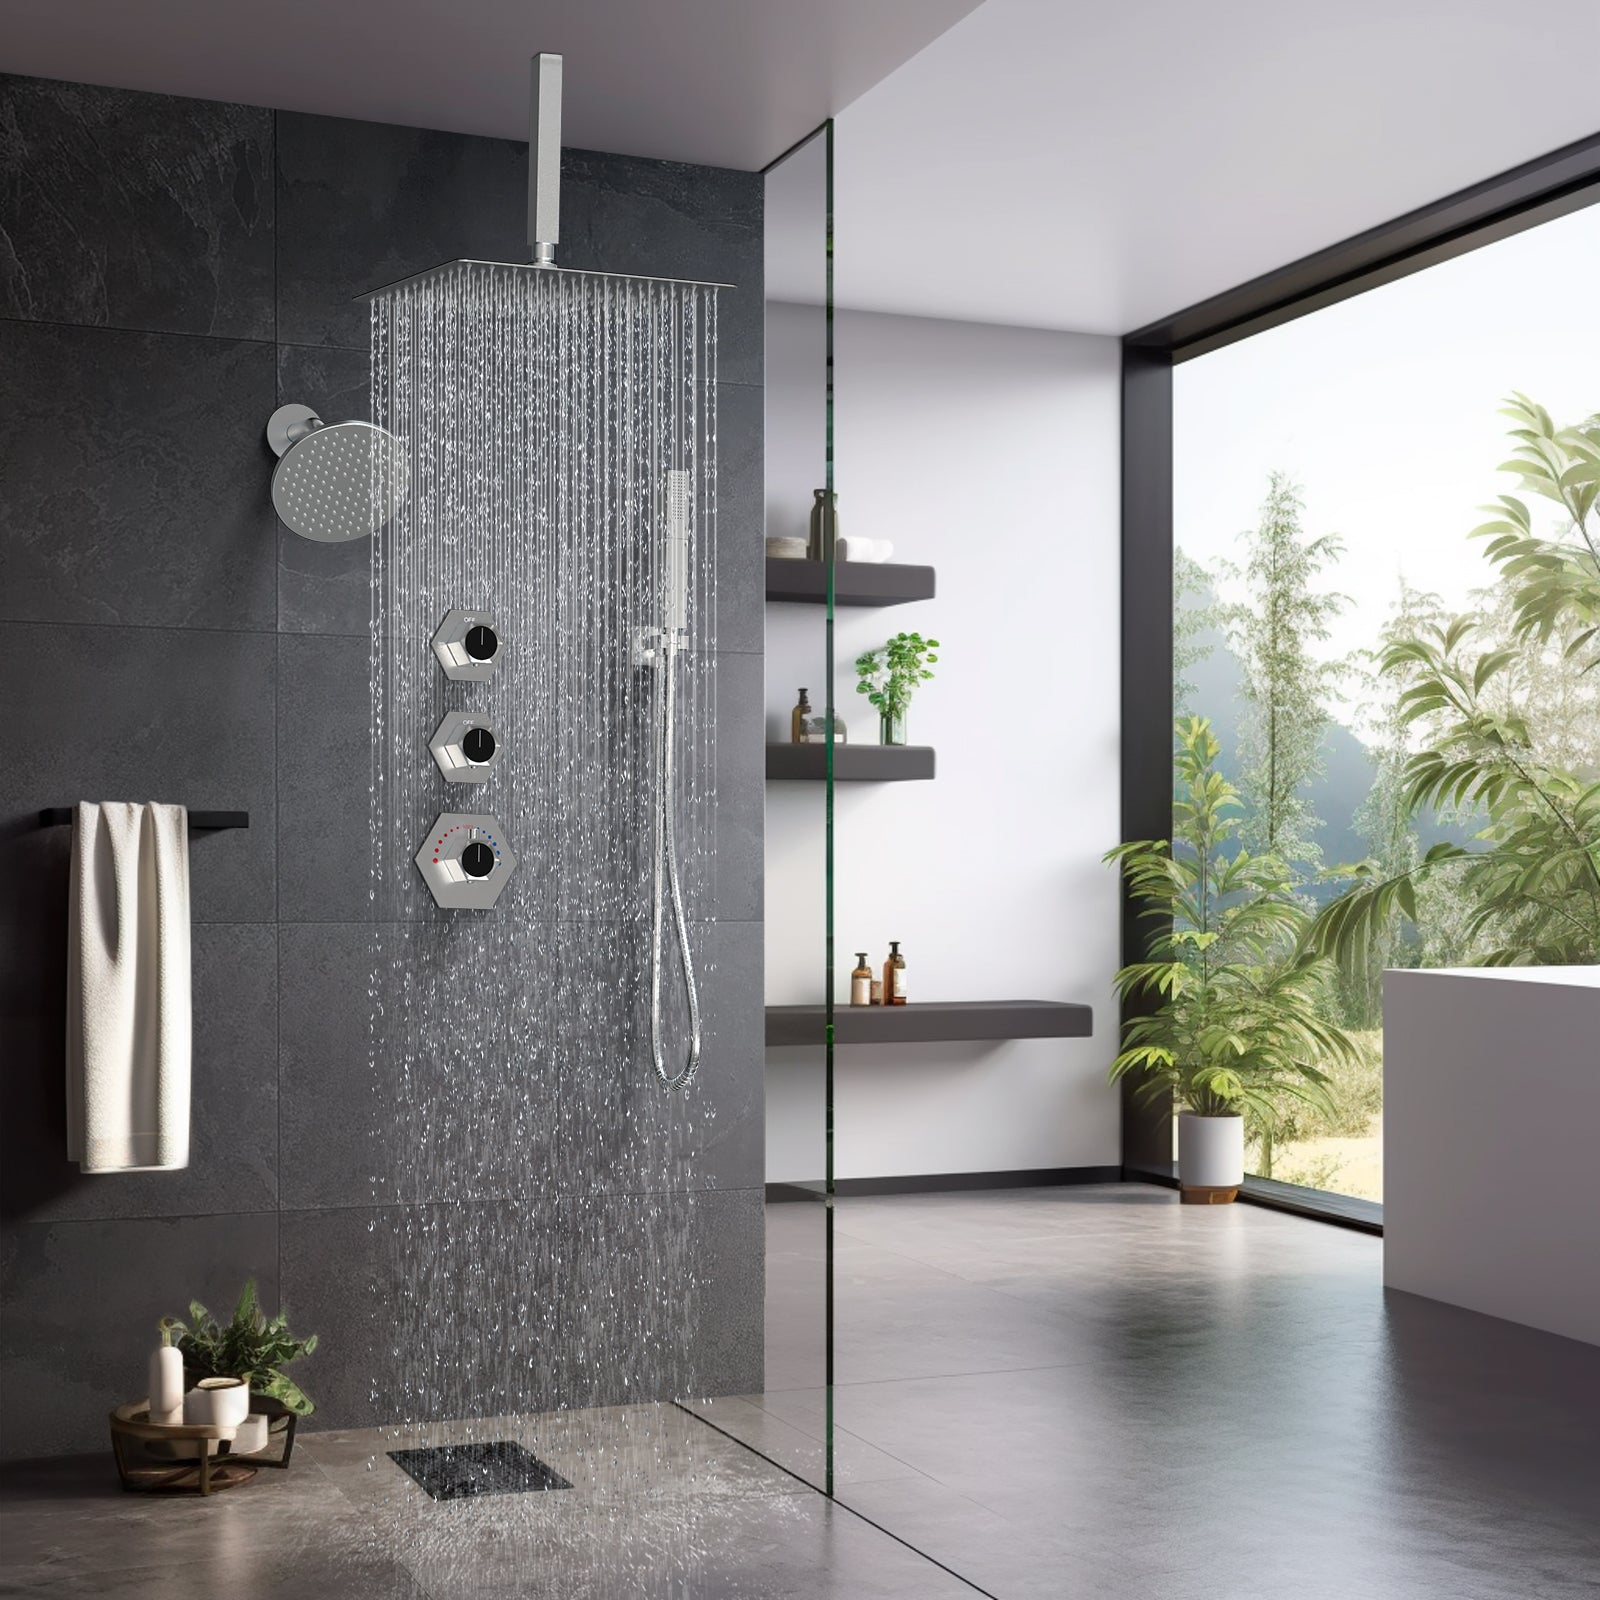 EVERSTEIN Luxury Dual Shower Heads: Brushed Nickel 12" Ceiling Mounted Rain Showerhead Handheld Spray Bathroom Shower System